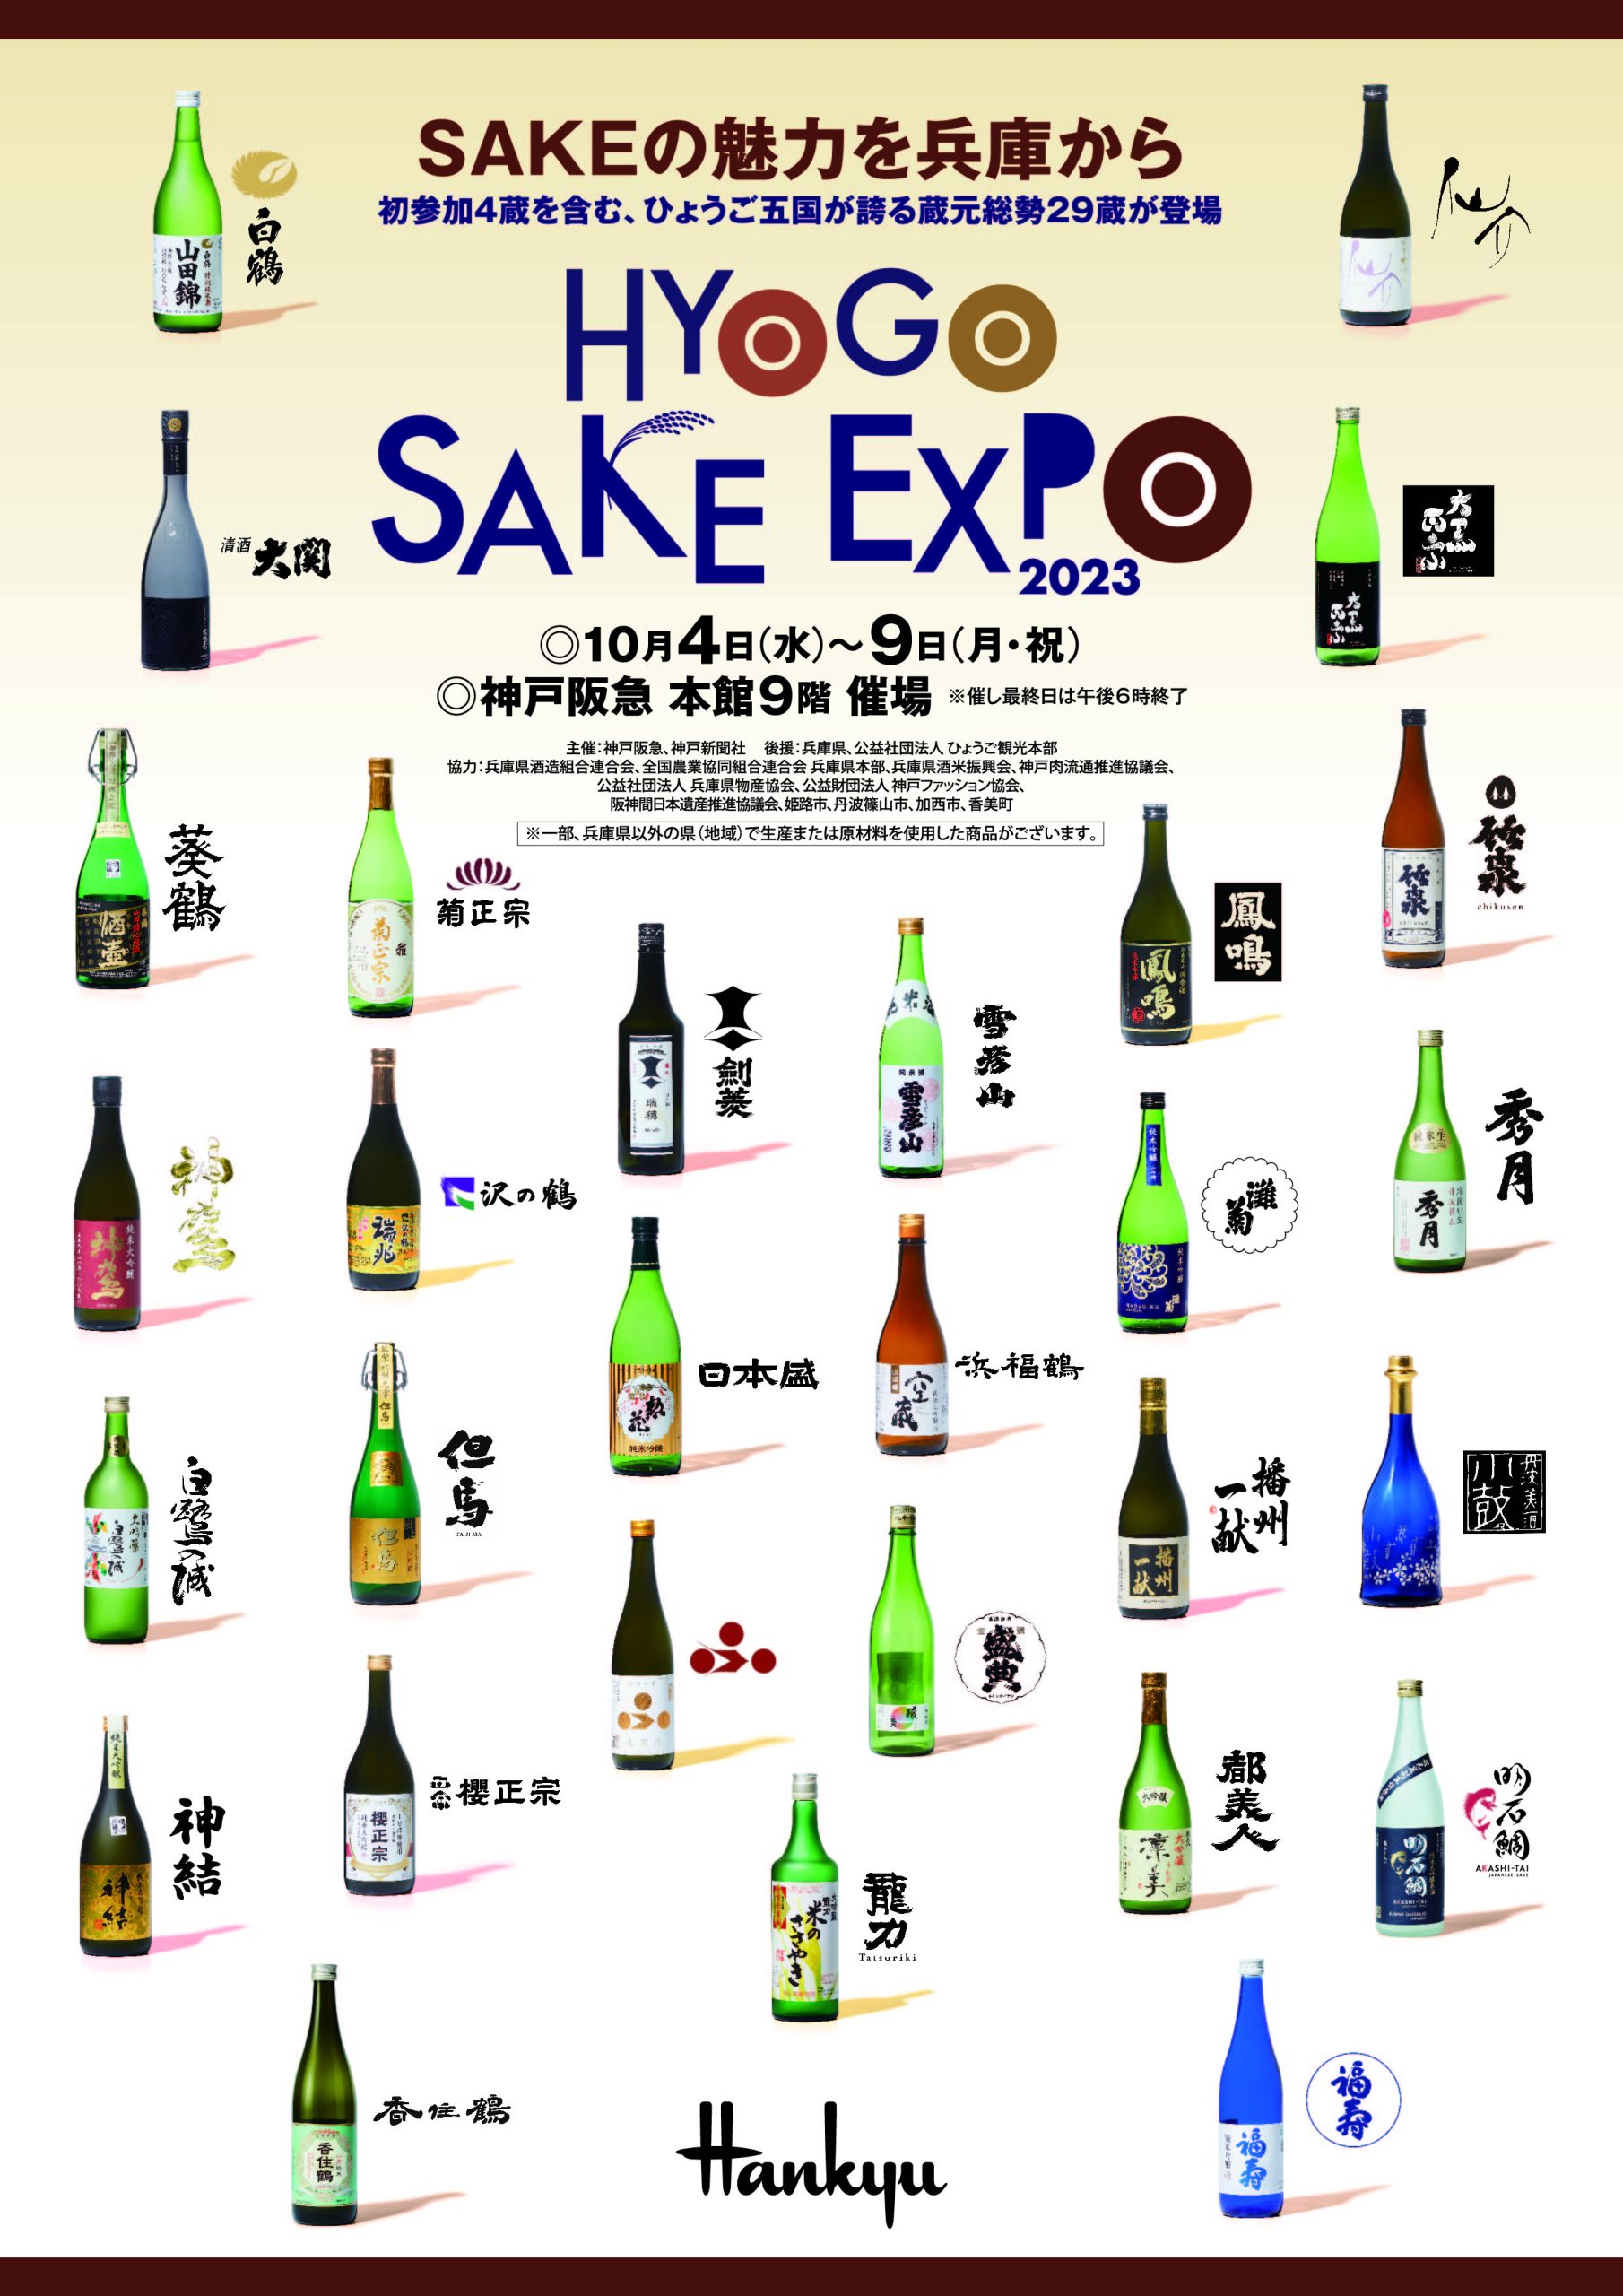 Hyogo sake expo